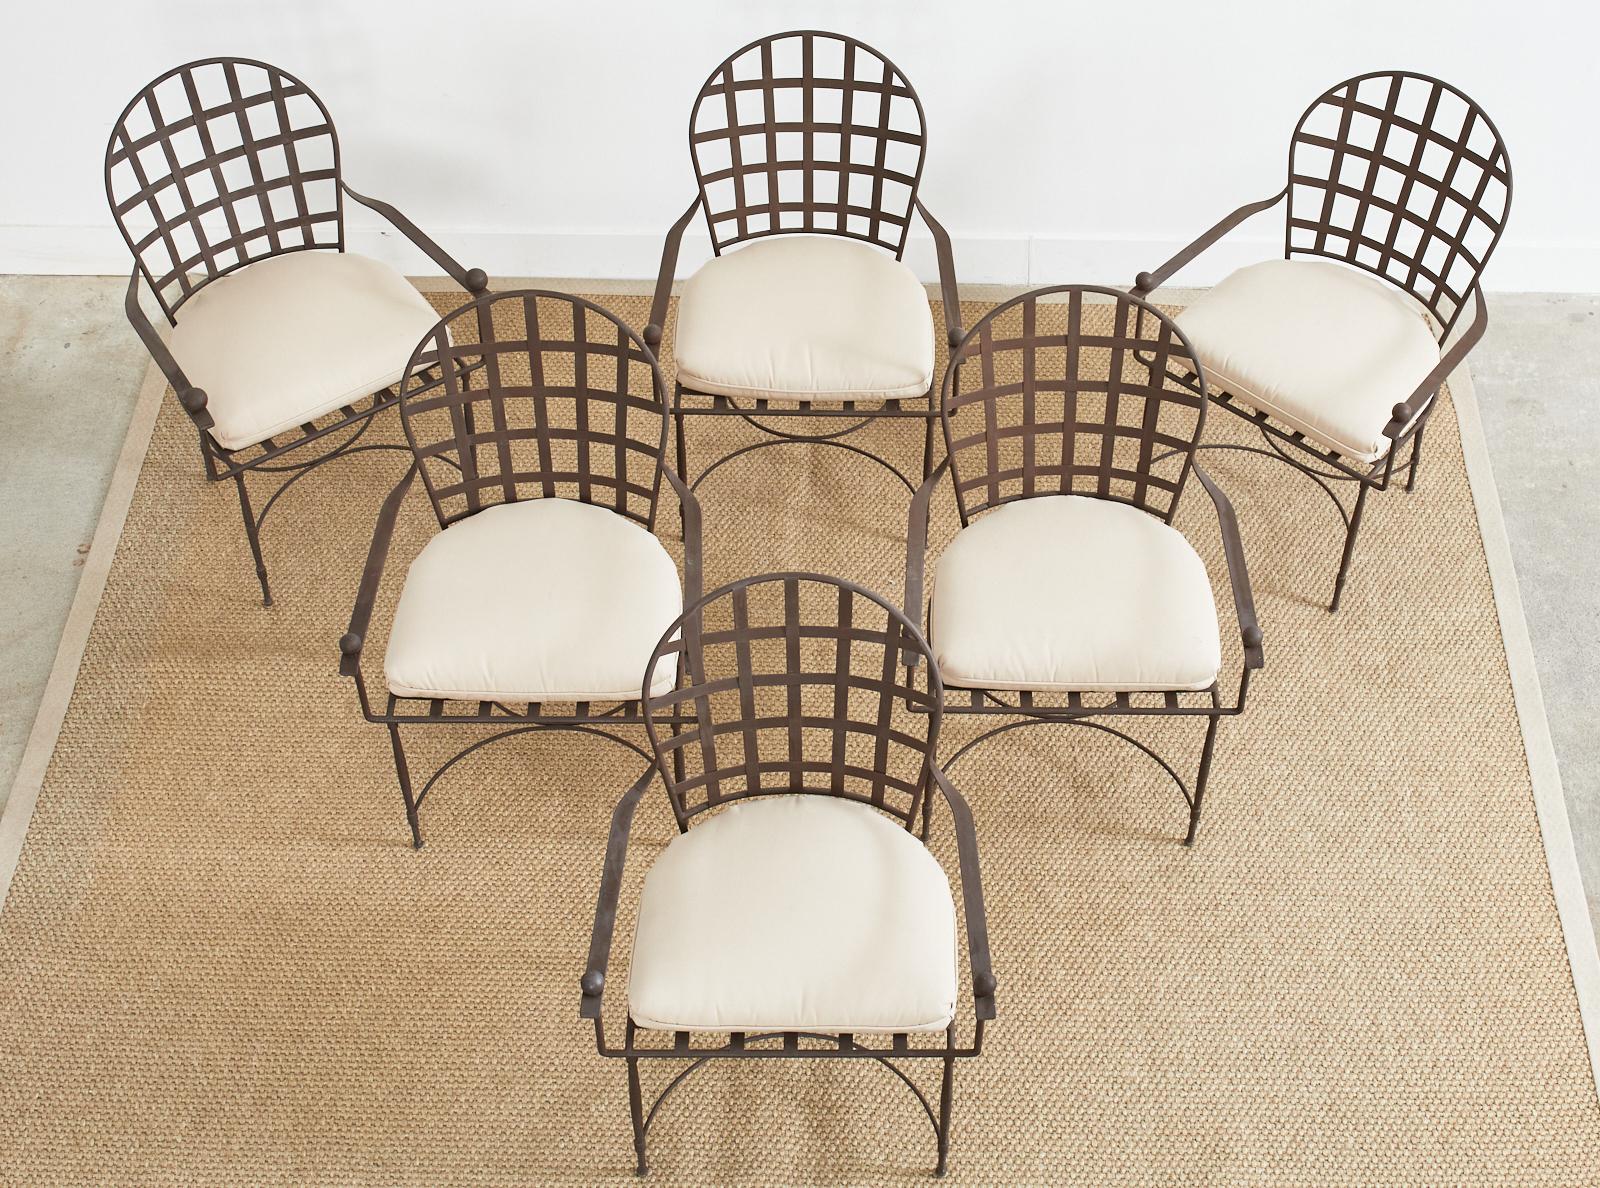 American Set of Six Mario Papperzini for John Salterini Iron Garden Chairs